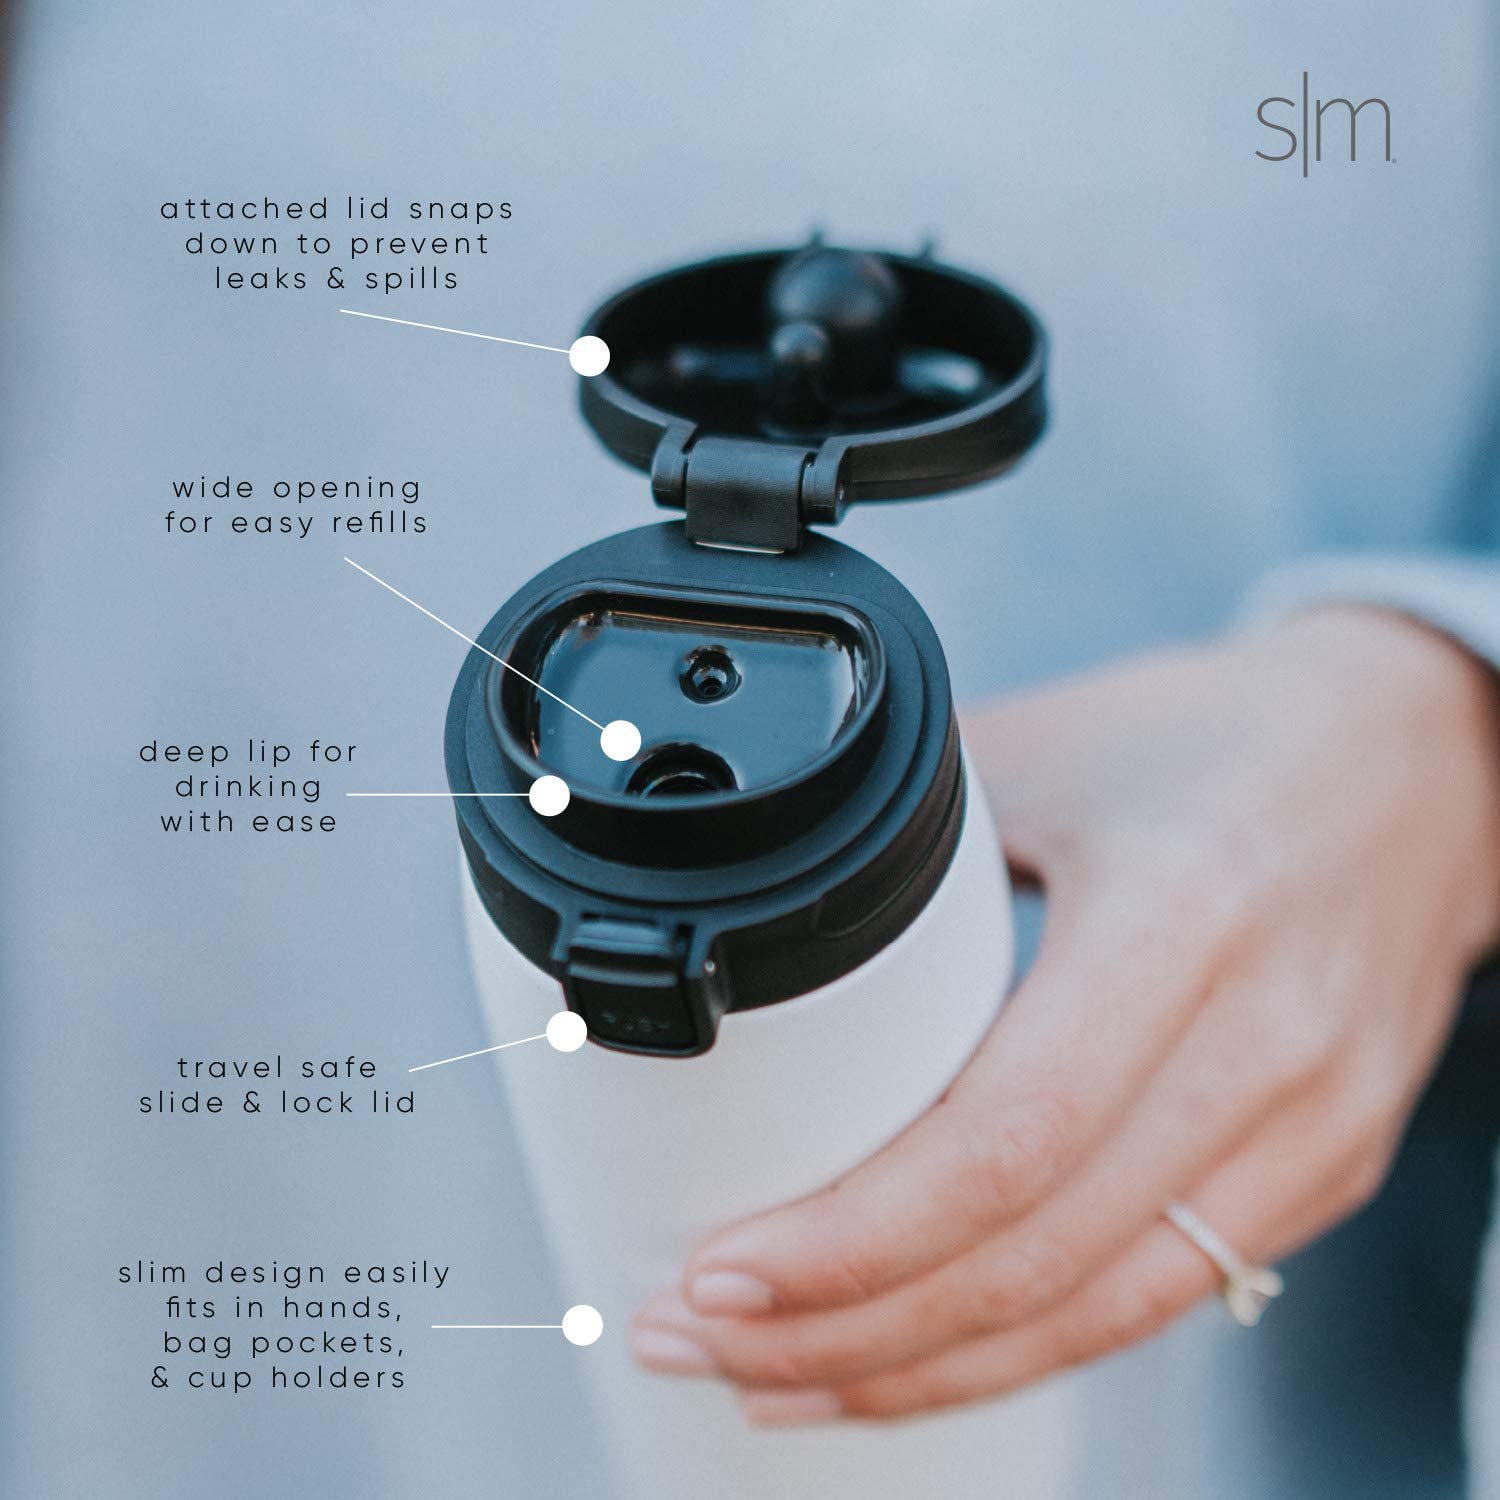 Simple Modern 18oz Scout Coffee Mug Tumbler - Travel Cup for Men